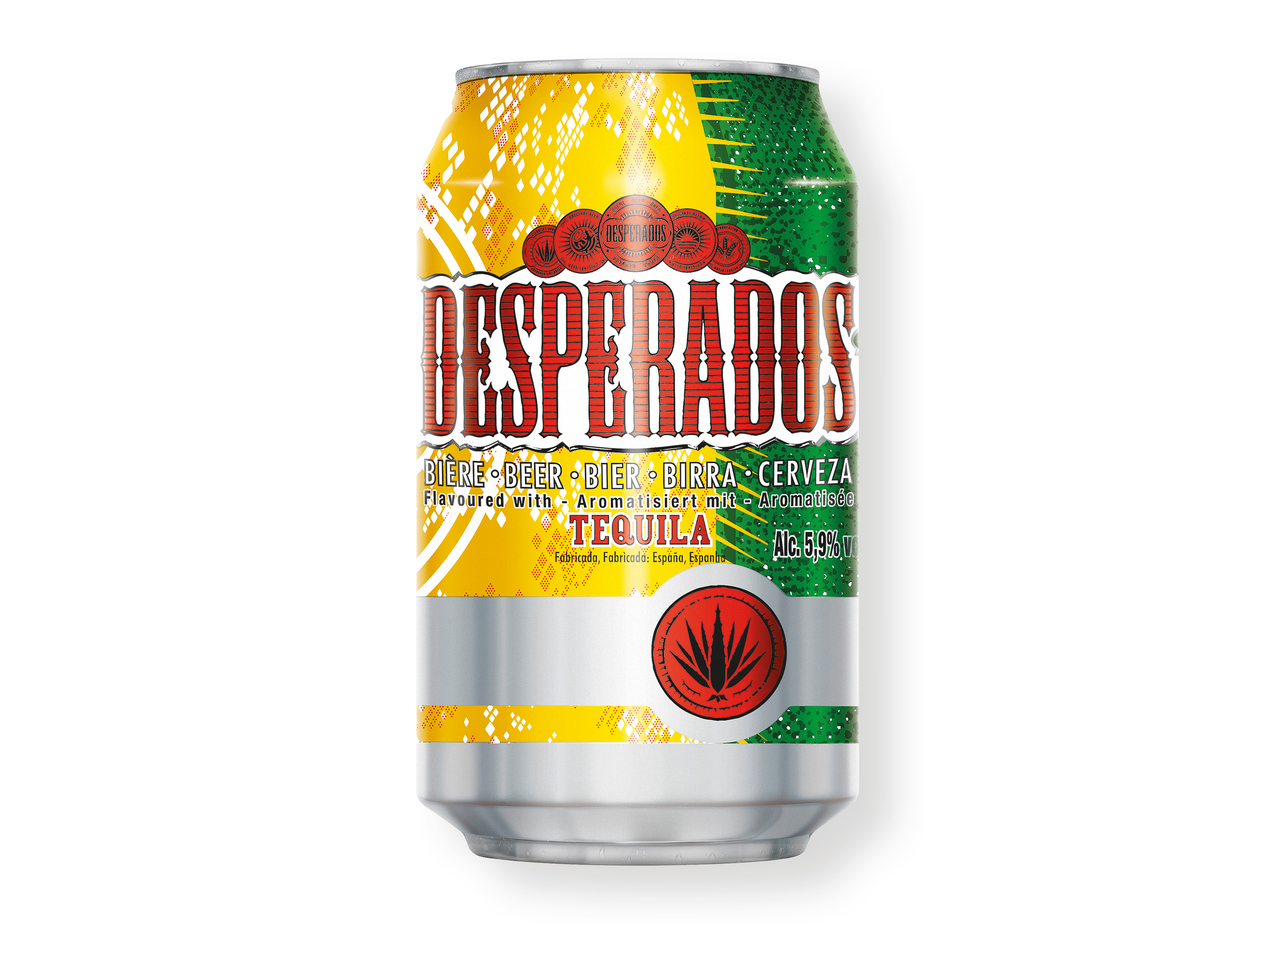 'Desperados(R)' Cerveza aromatizada con tequila